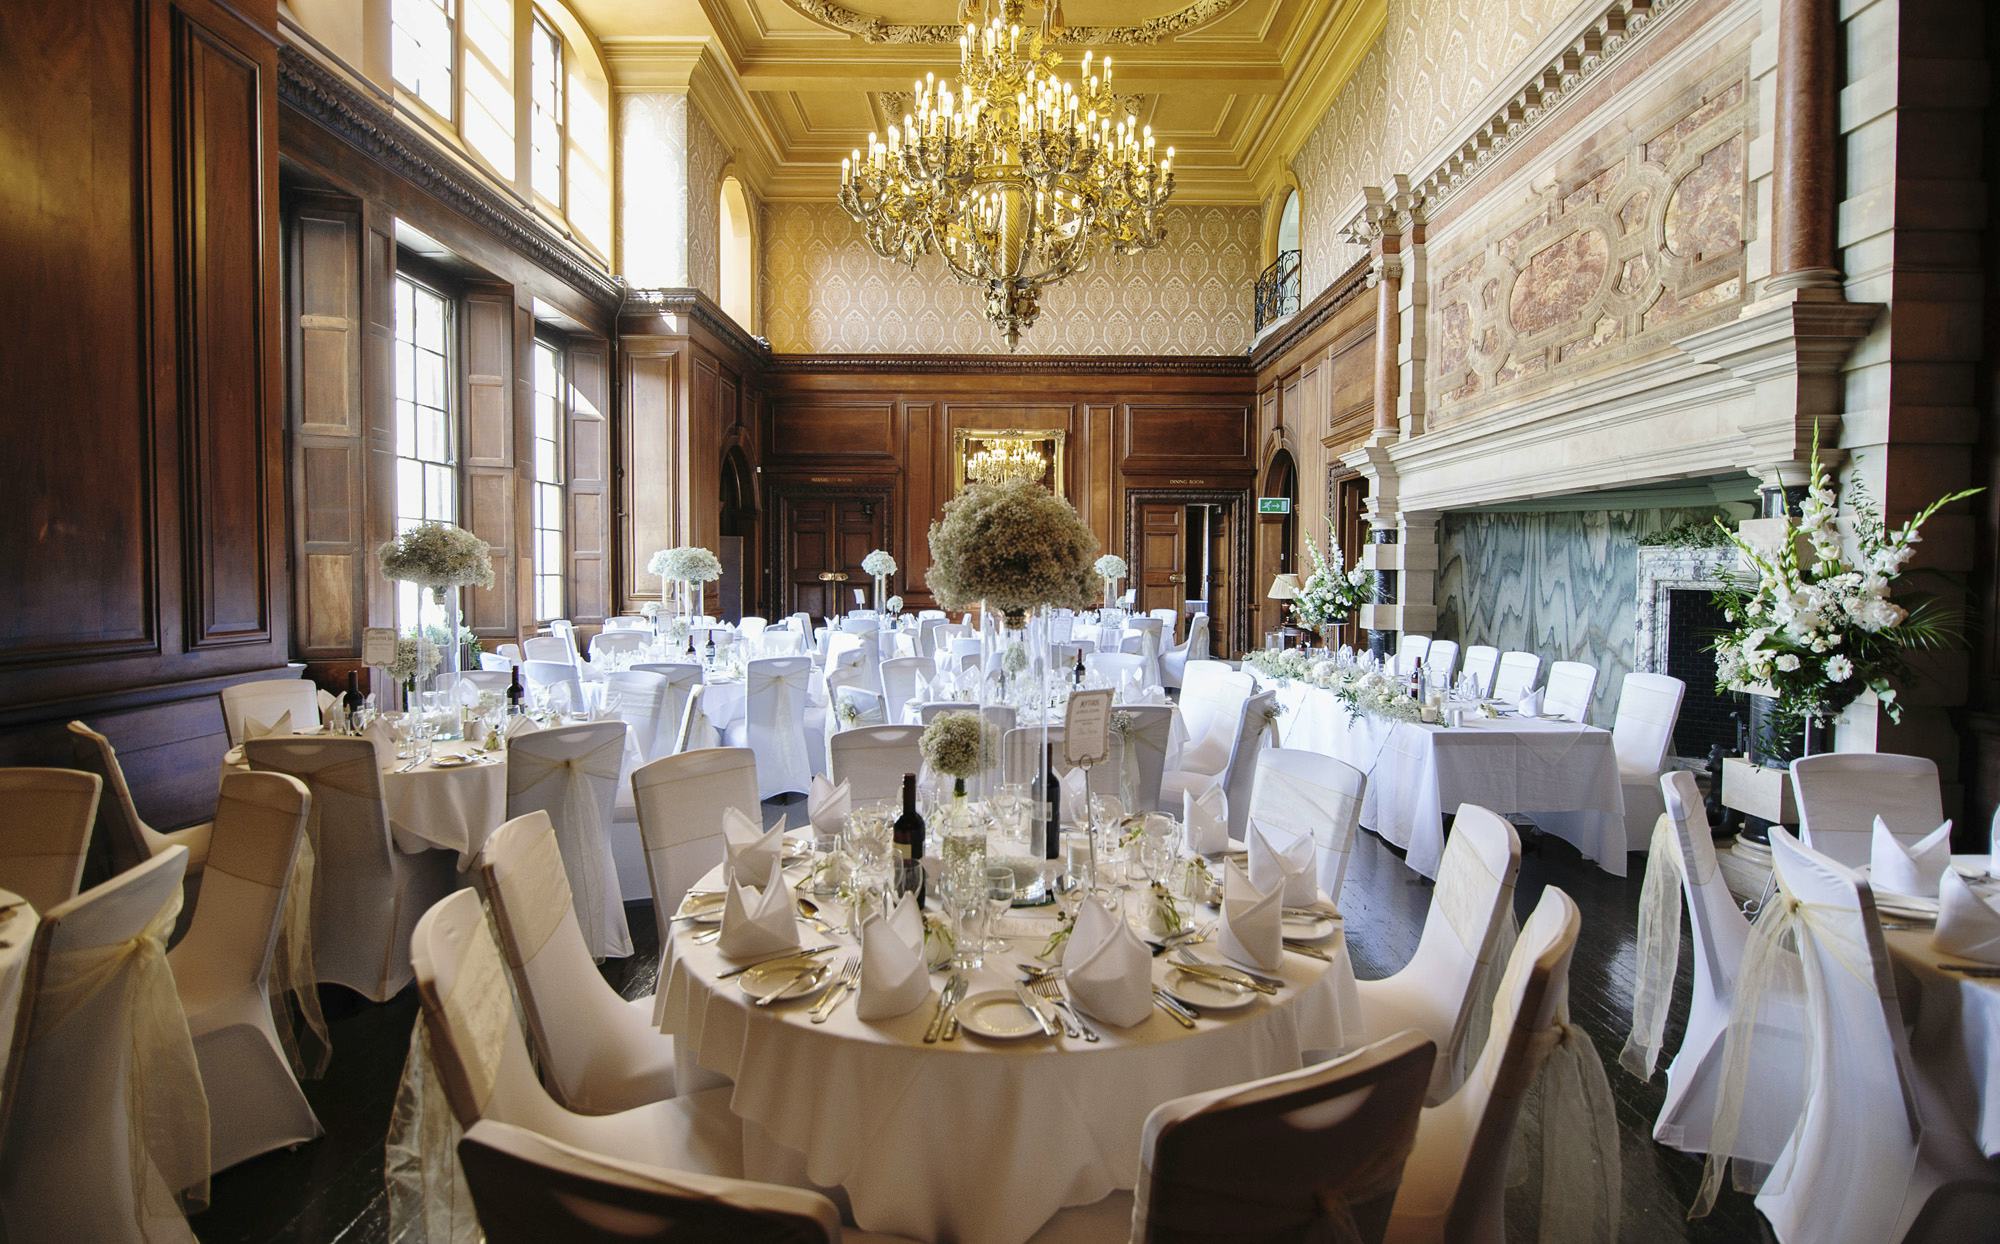 Addington Palace venue hire events banqueting dining tables